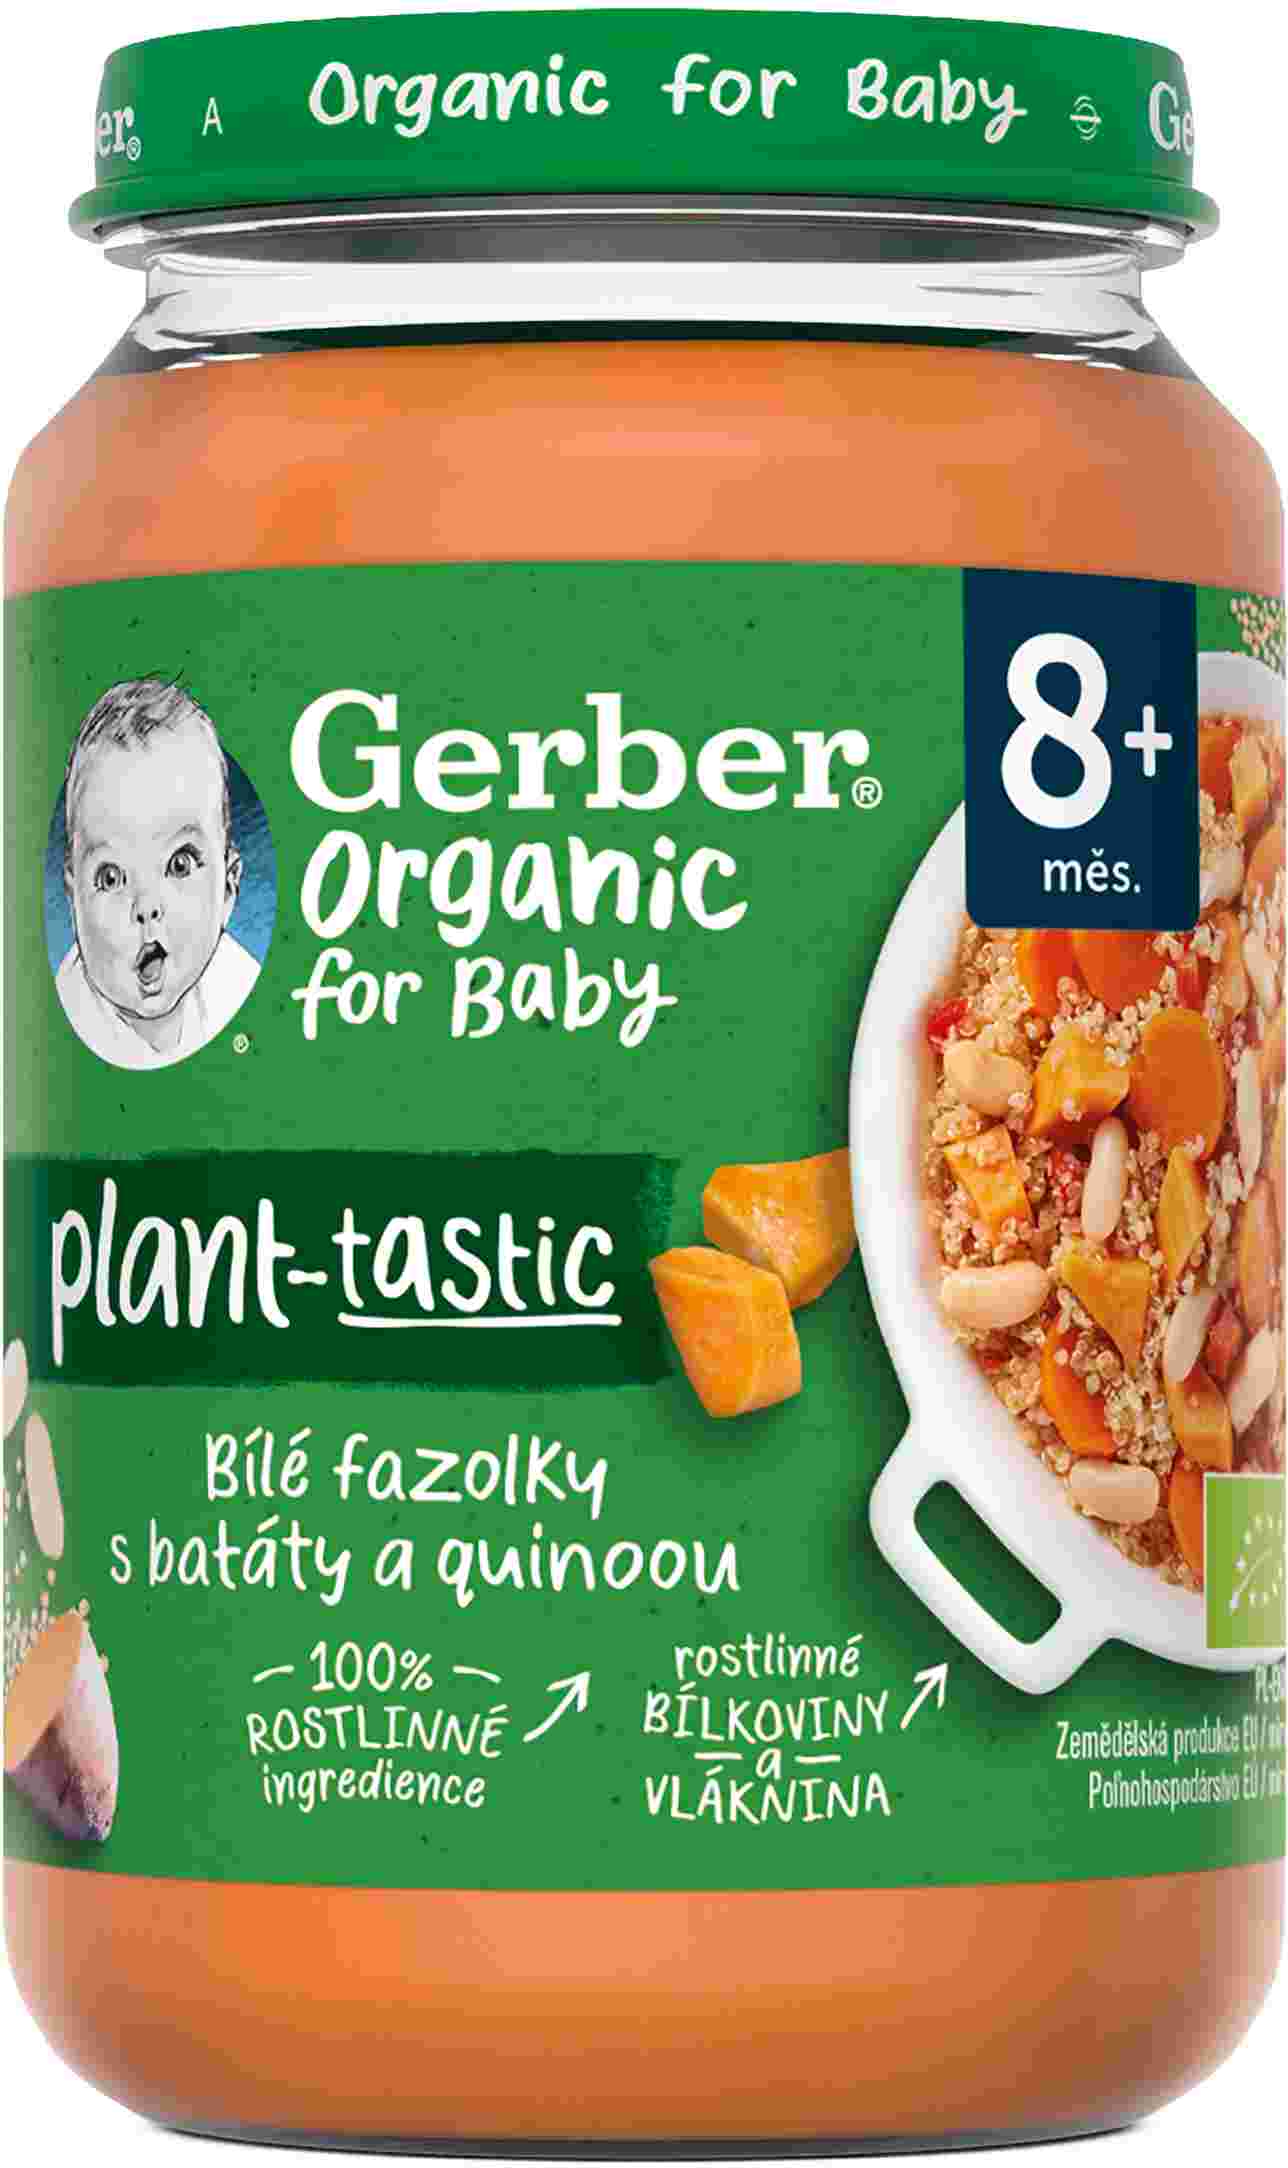 Gerber Organic 100 percent Rastlinný príkrm